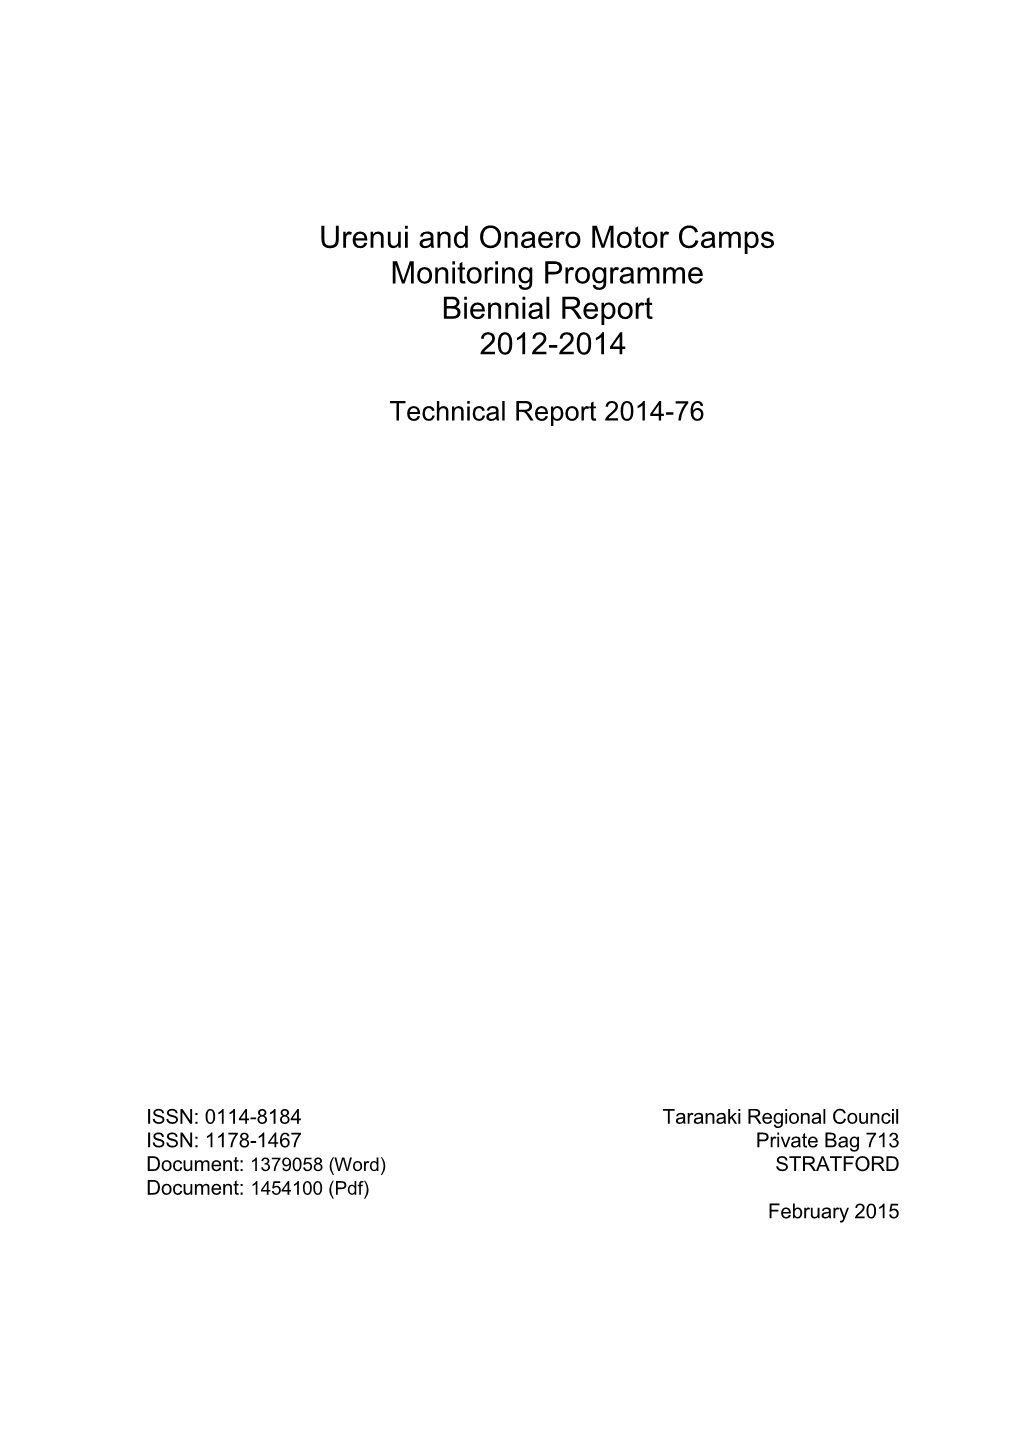 Urenui and Onaero Motor Camps Monitoring Report